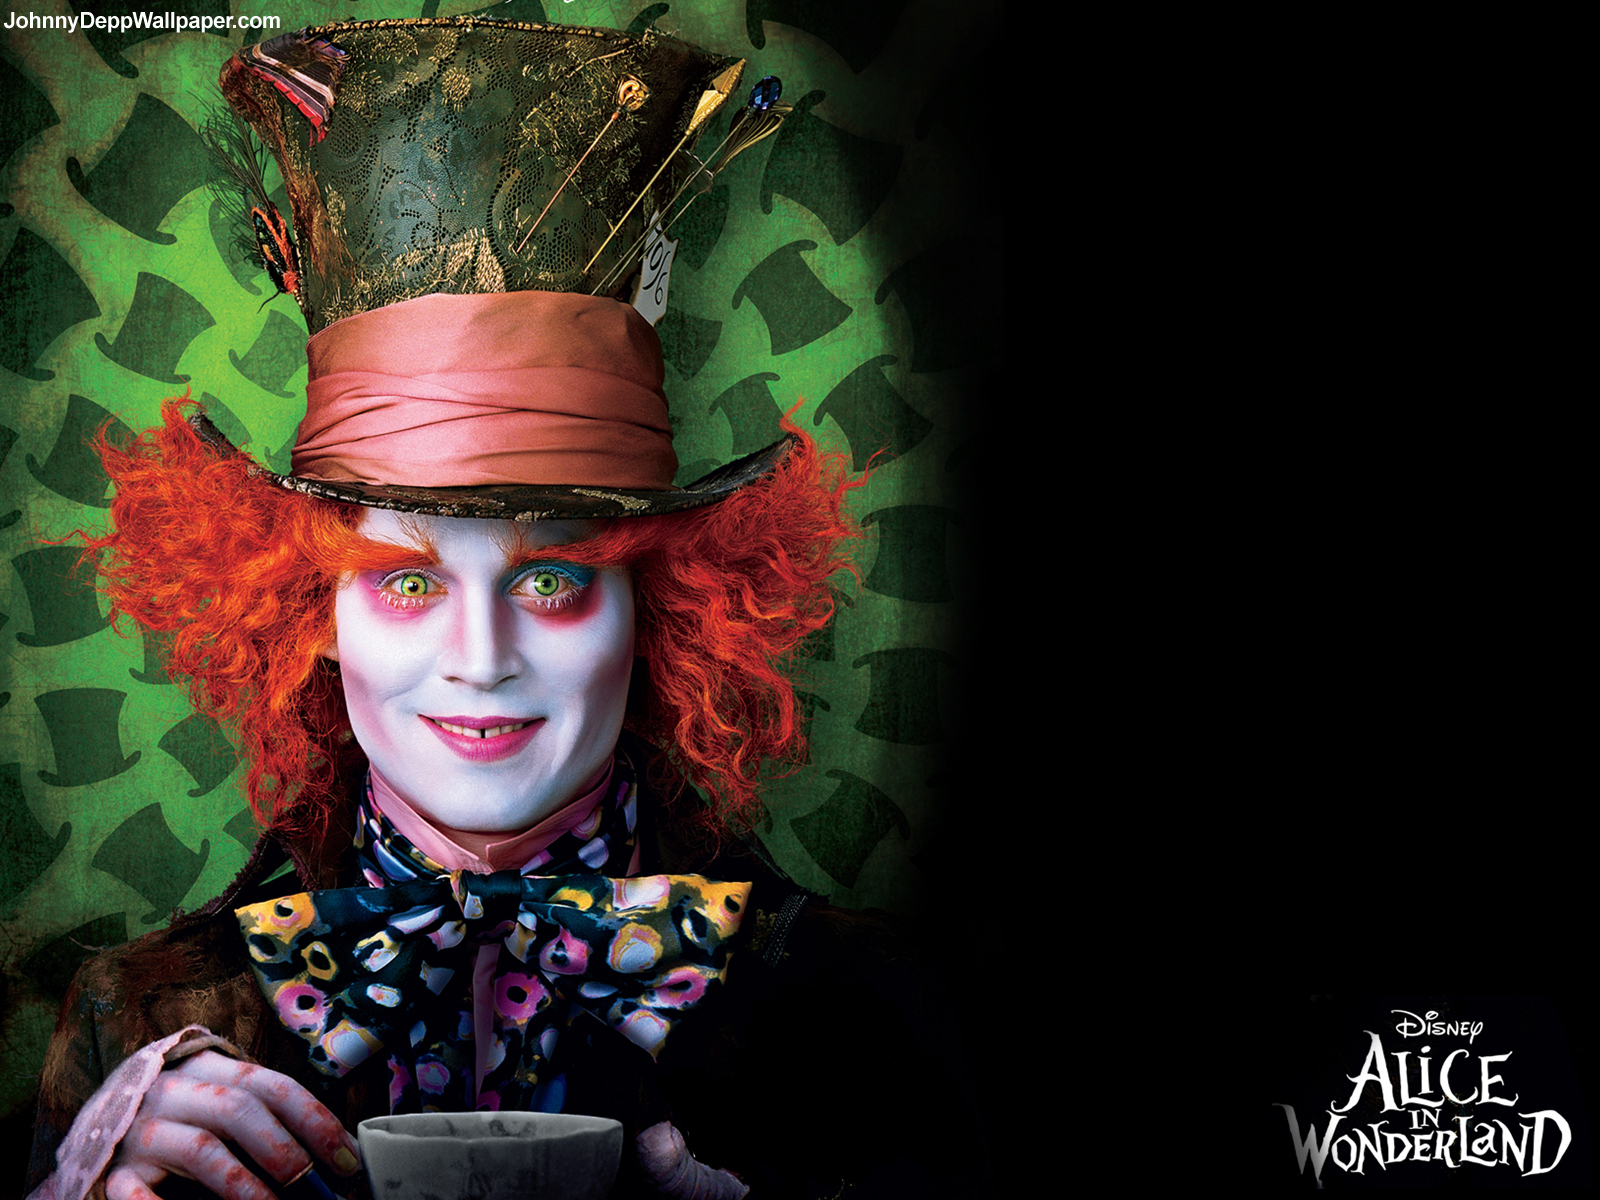 Depp Wallpaper Alice In Wonderland